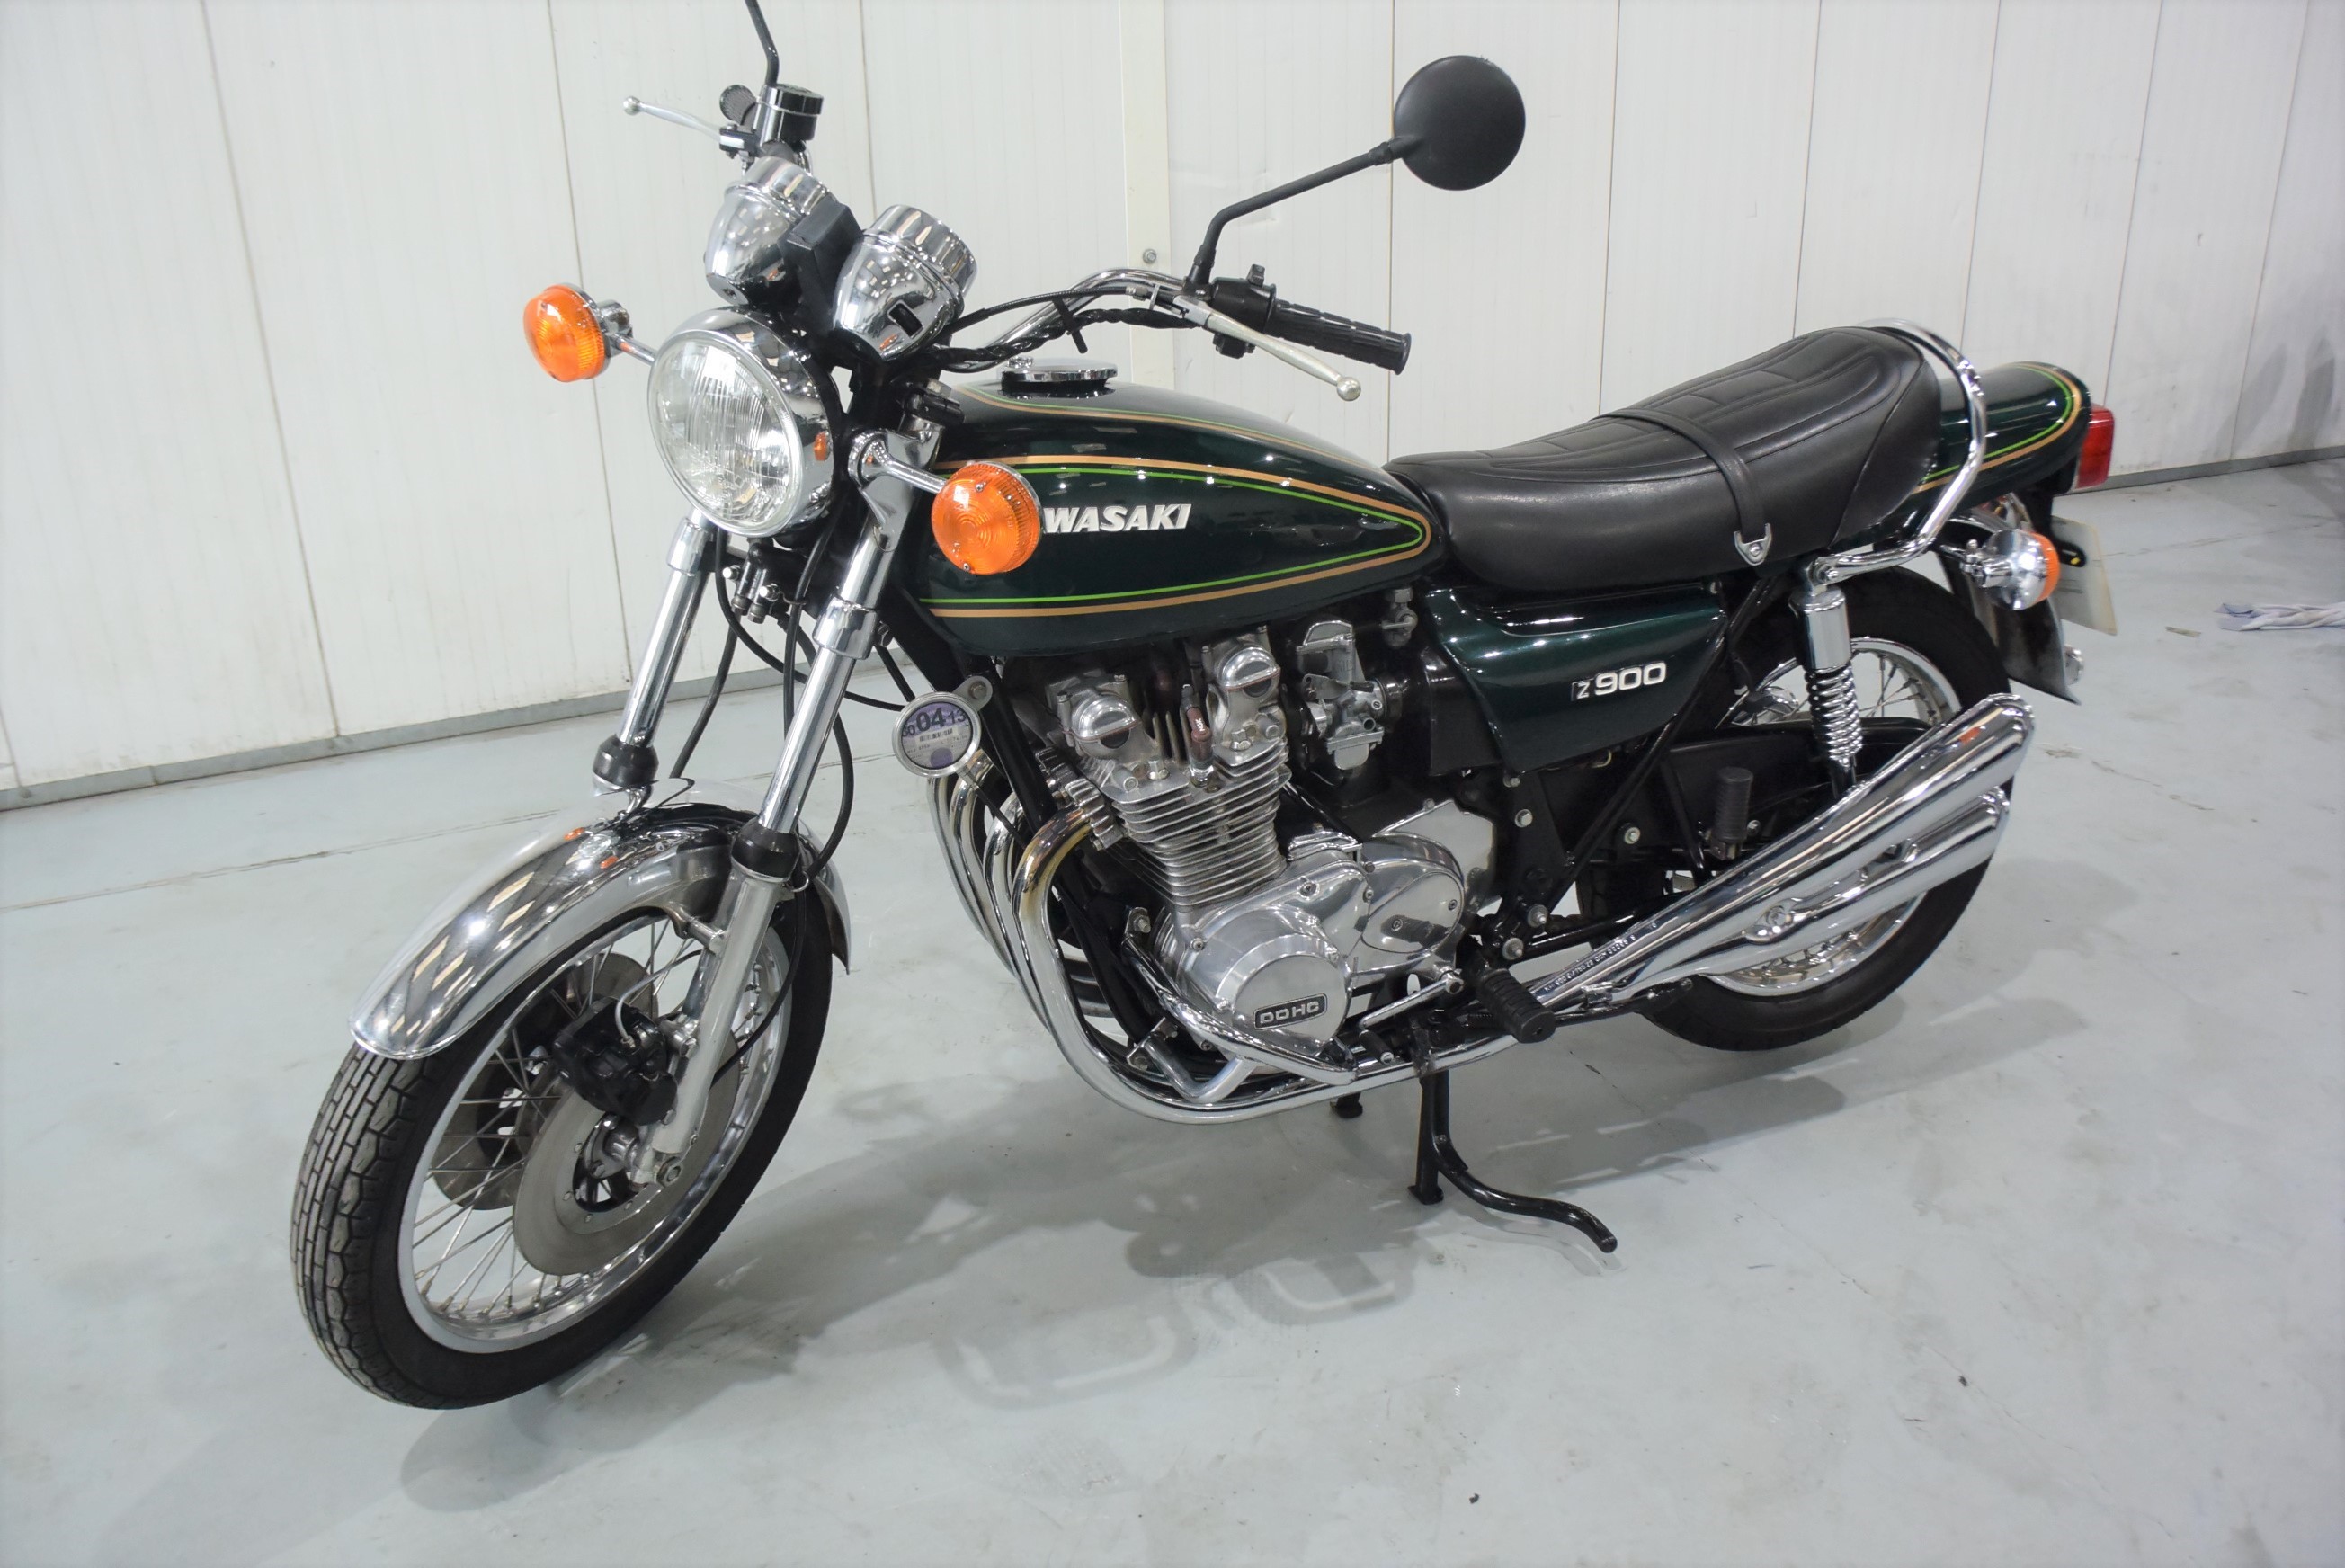 Classic Kawasaki Z1 for sale H&H Classics Auction